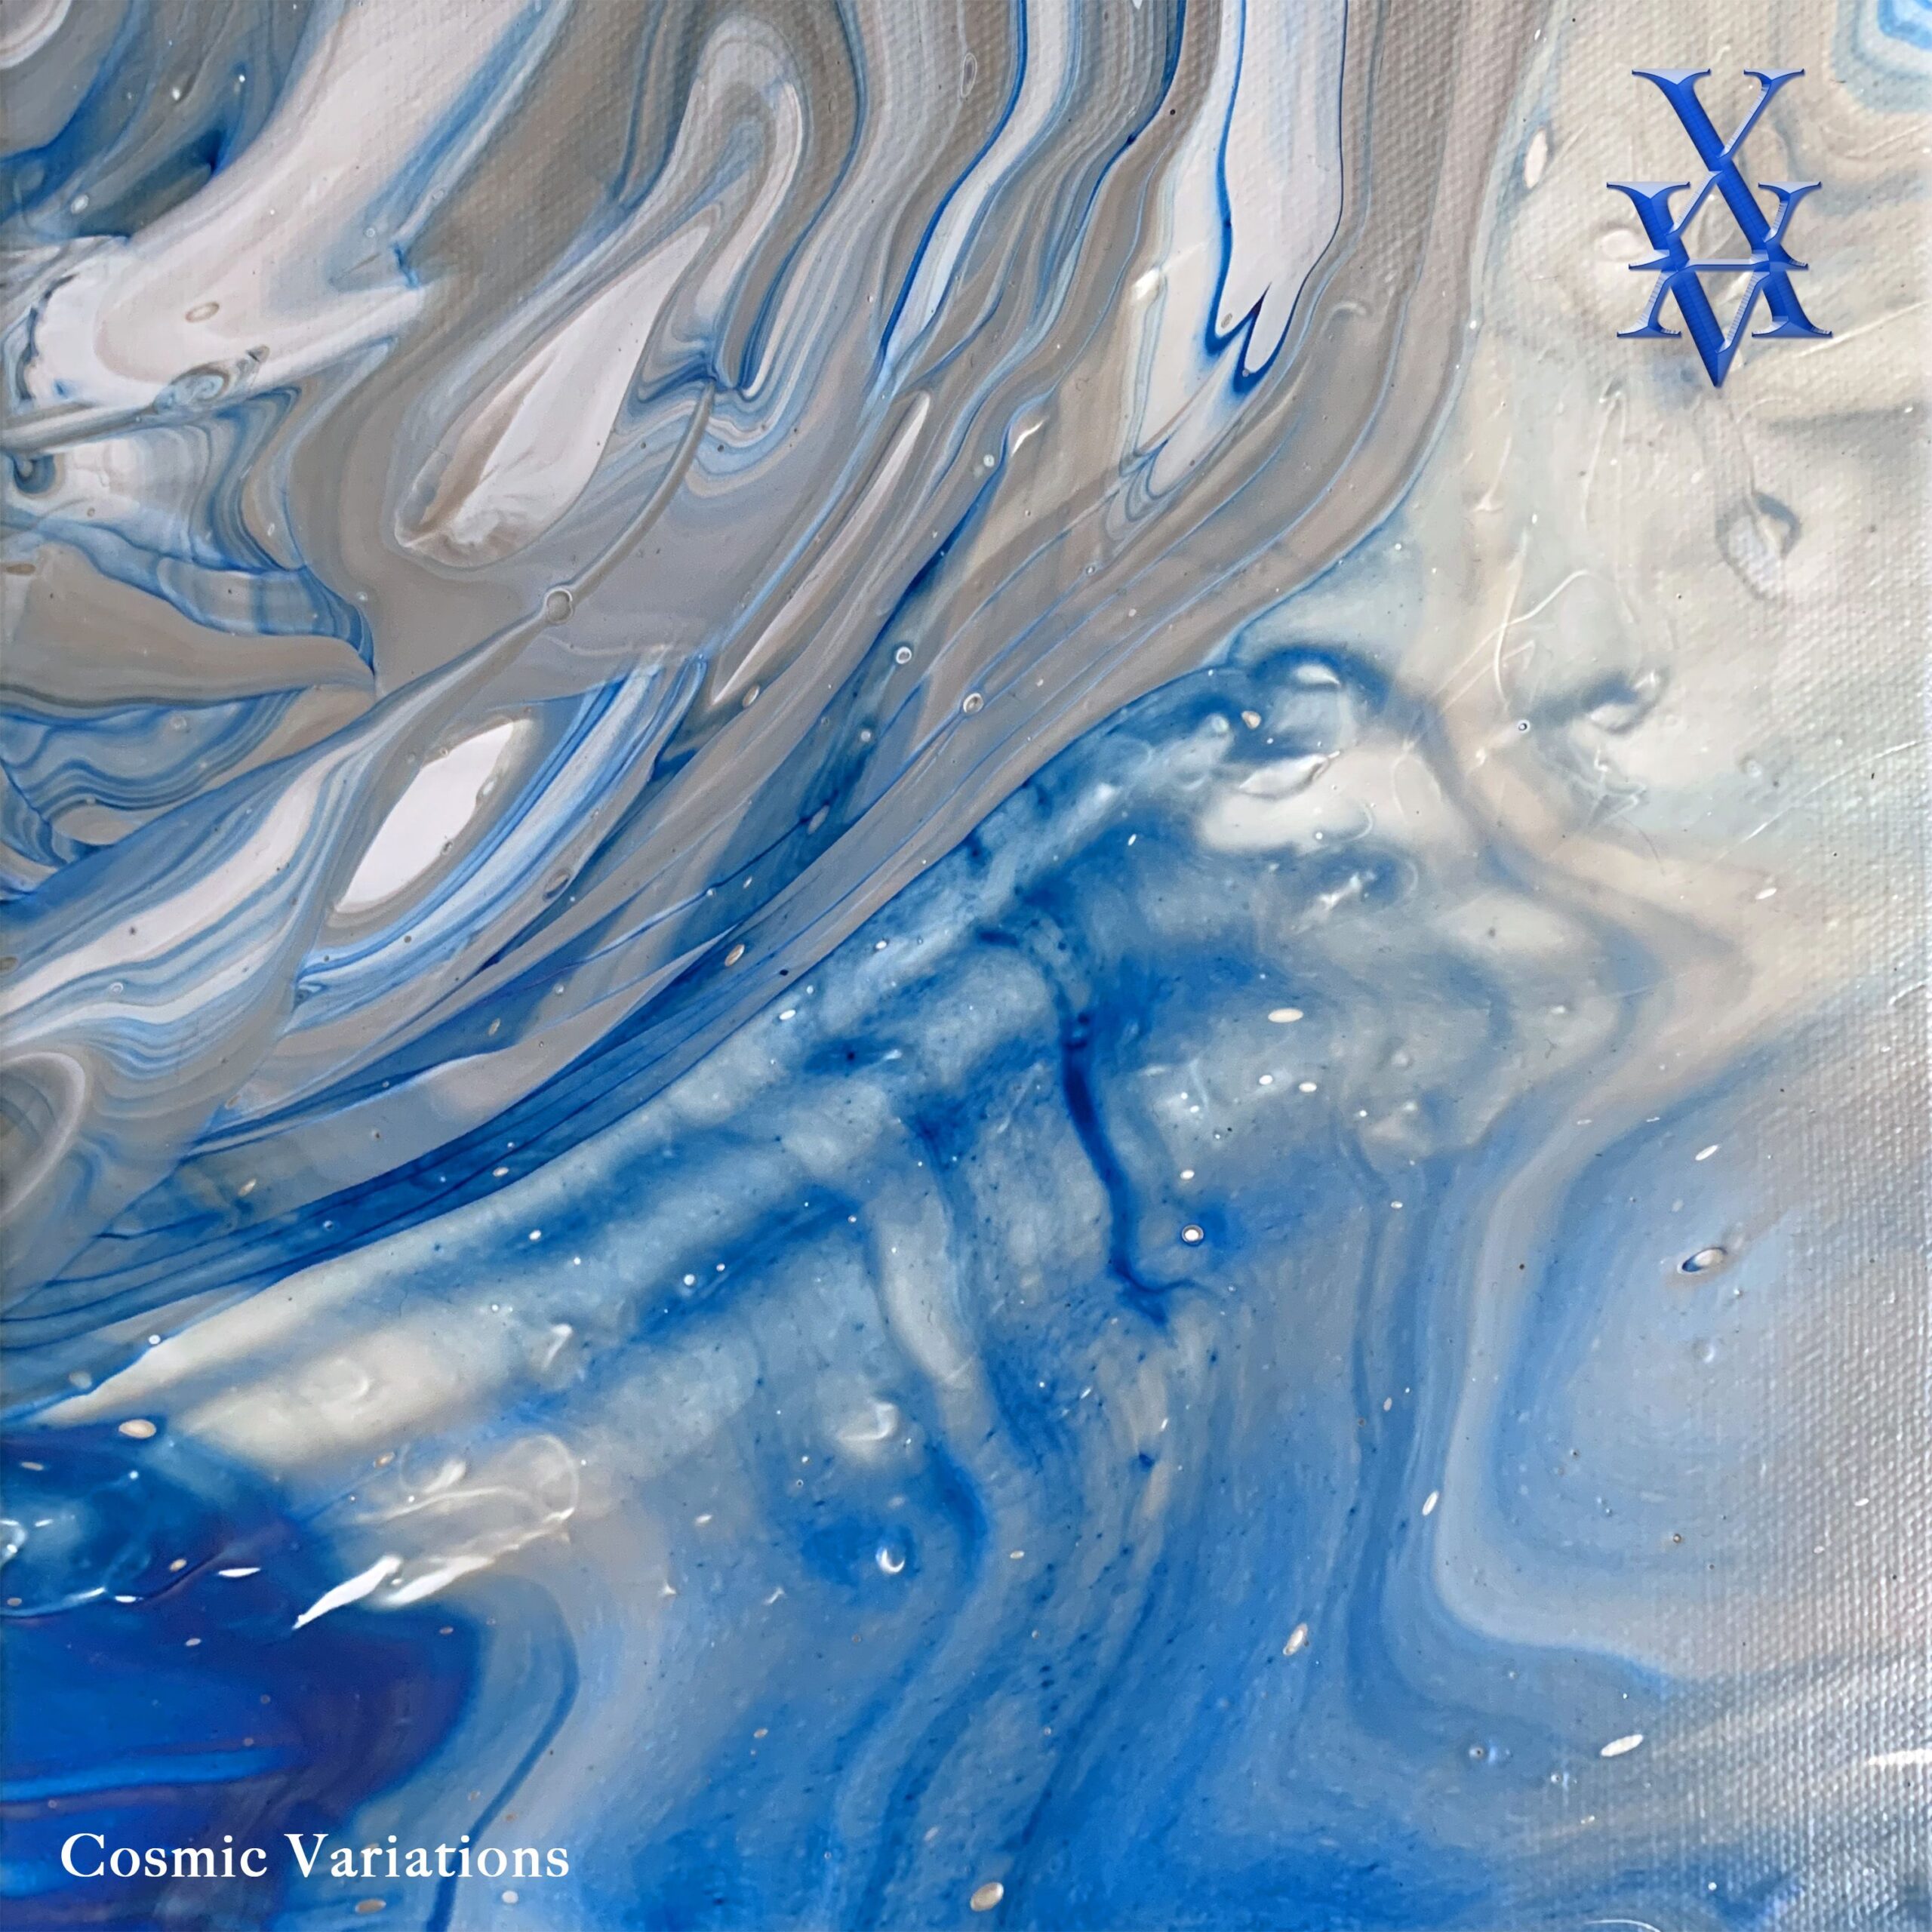 Xavier Boscher – "Cosmic Variations"